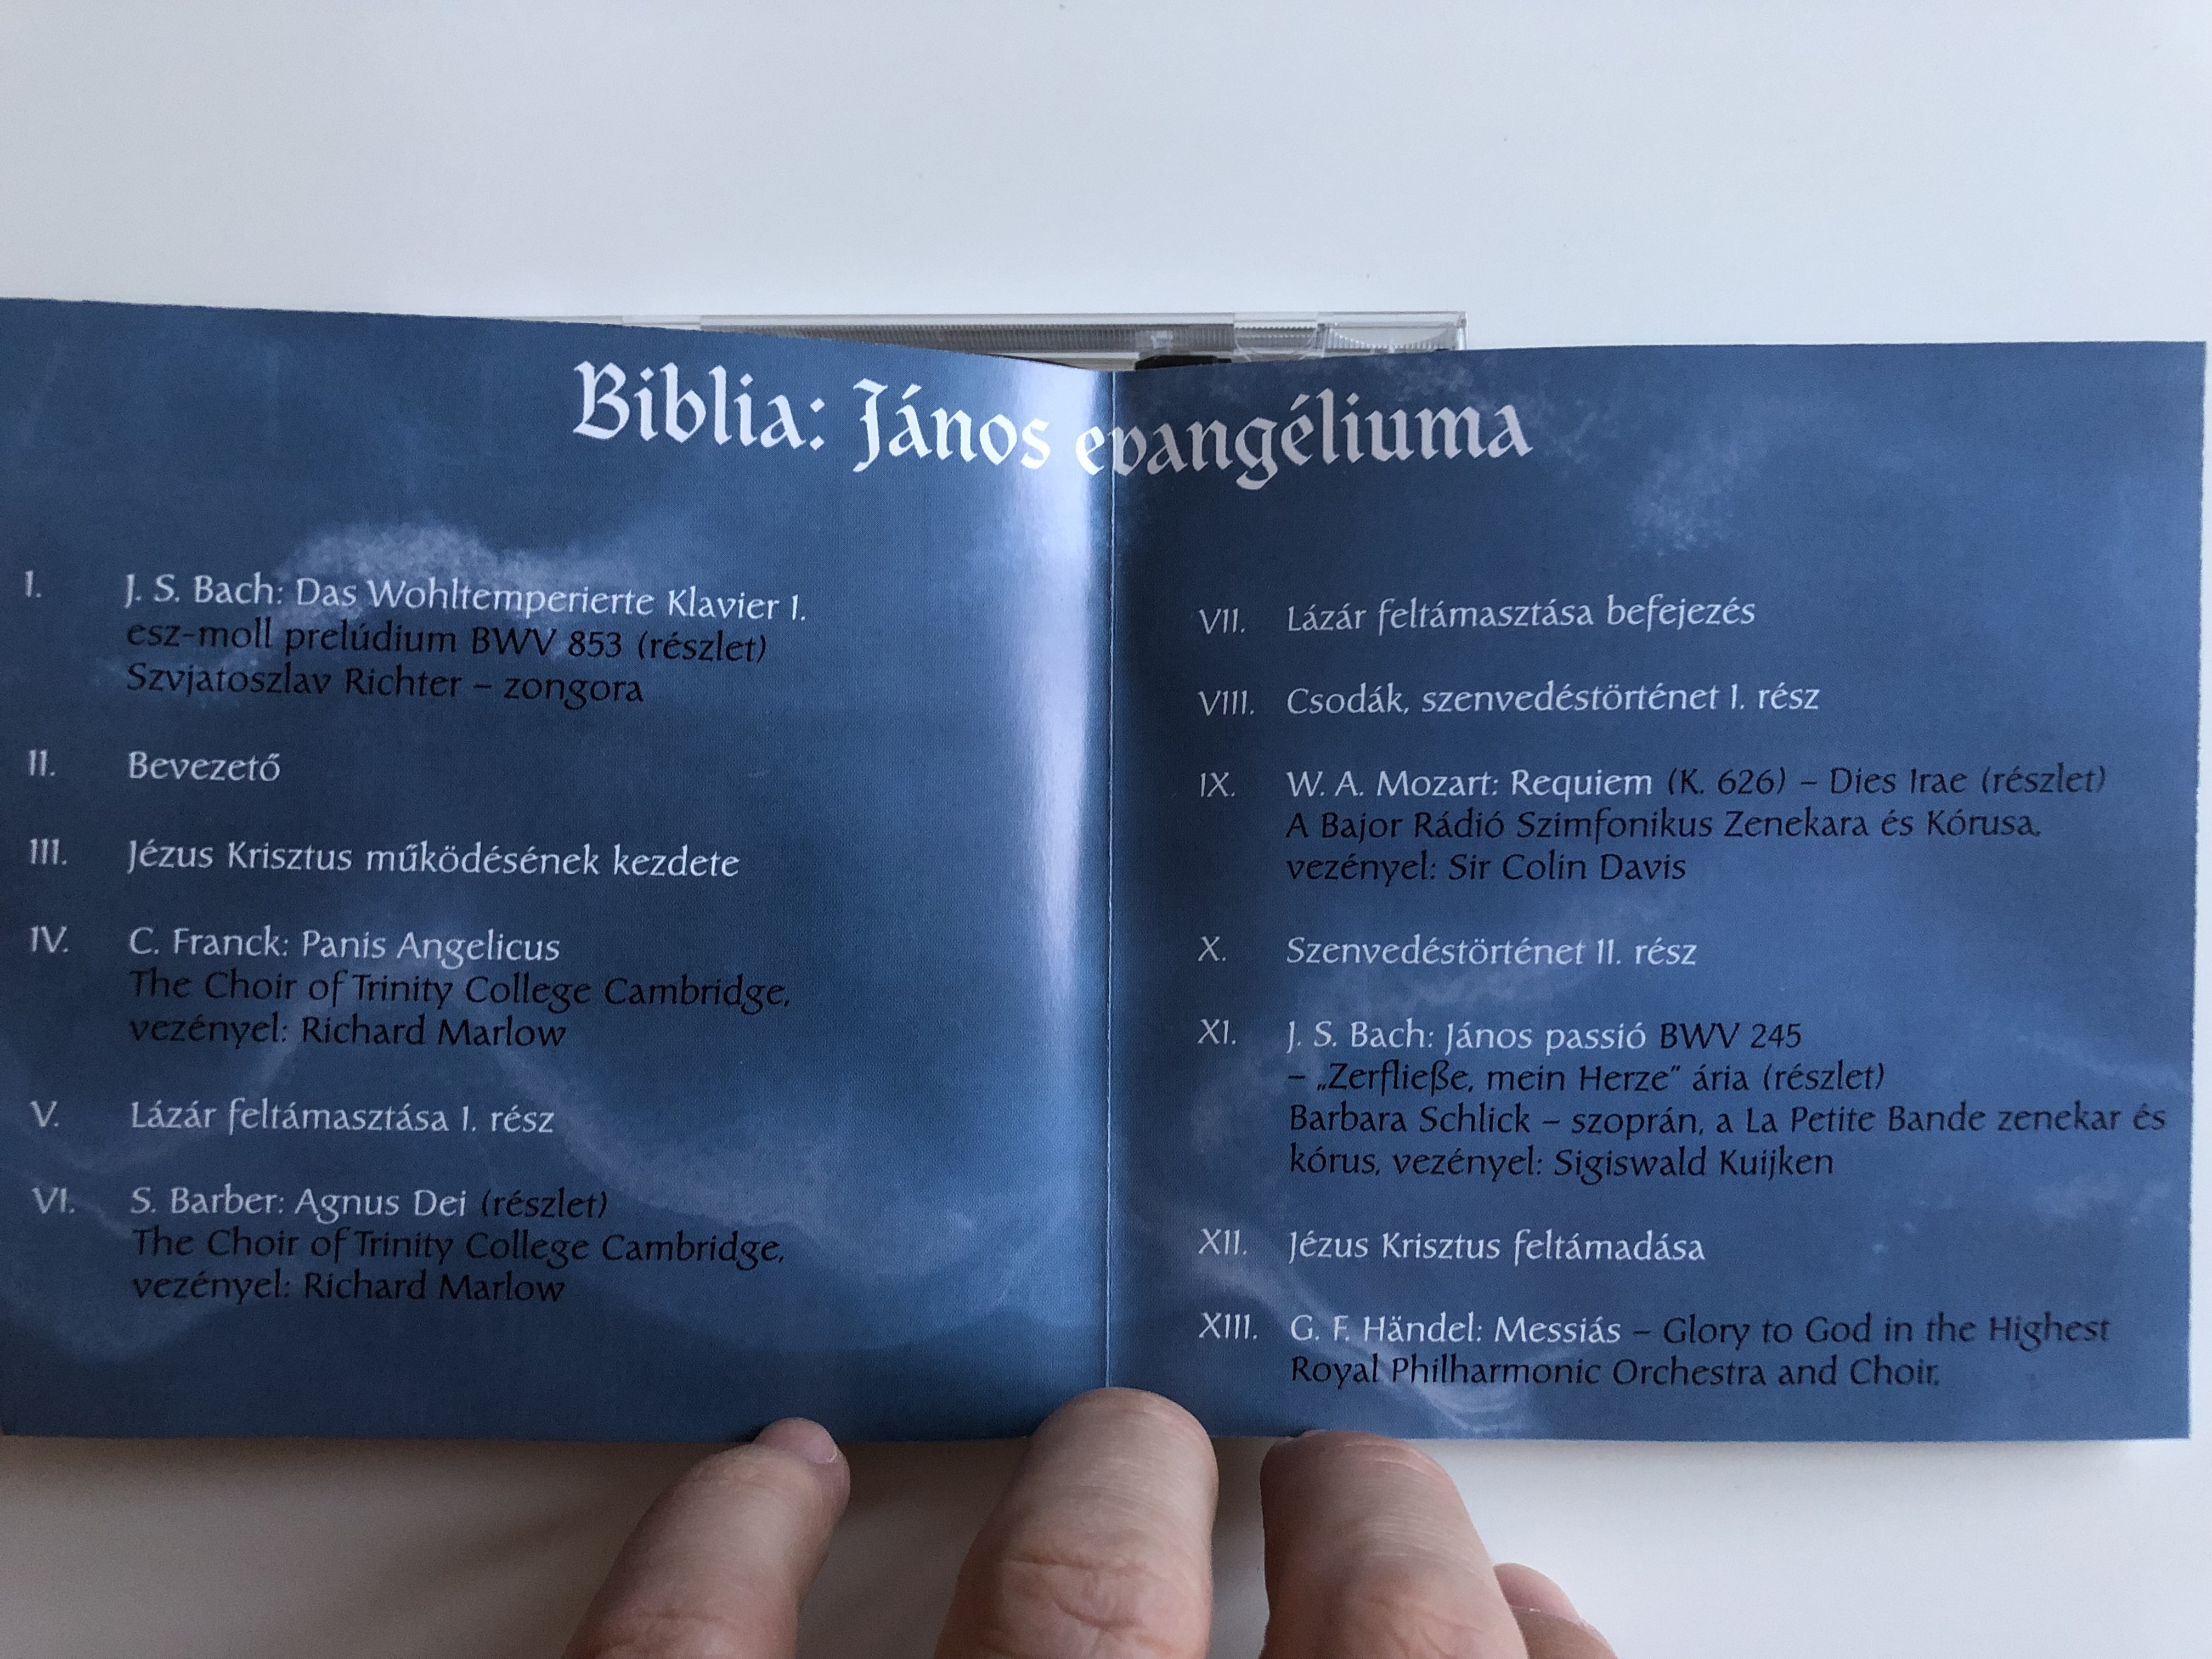 ja-nos-evange-liuma-biblia-cdimg-4342.jpg